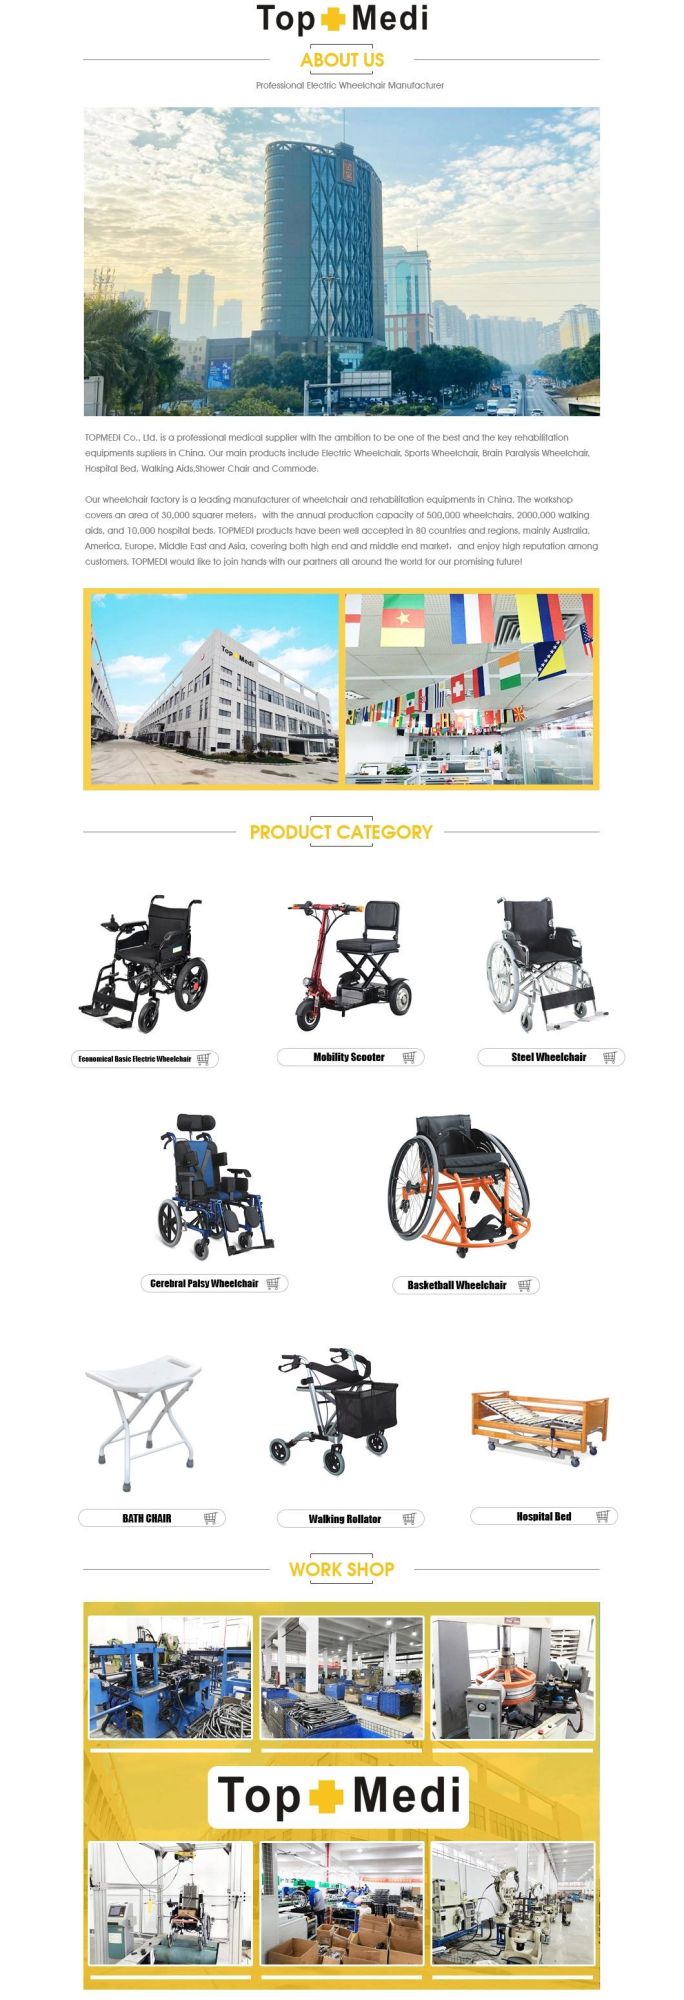 New Pediatric Medical Equipment Lightweight Children Wheelchair